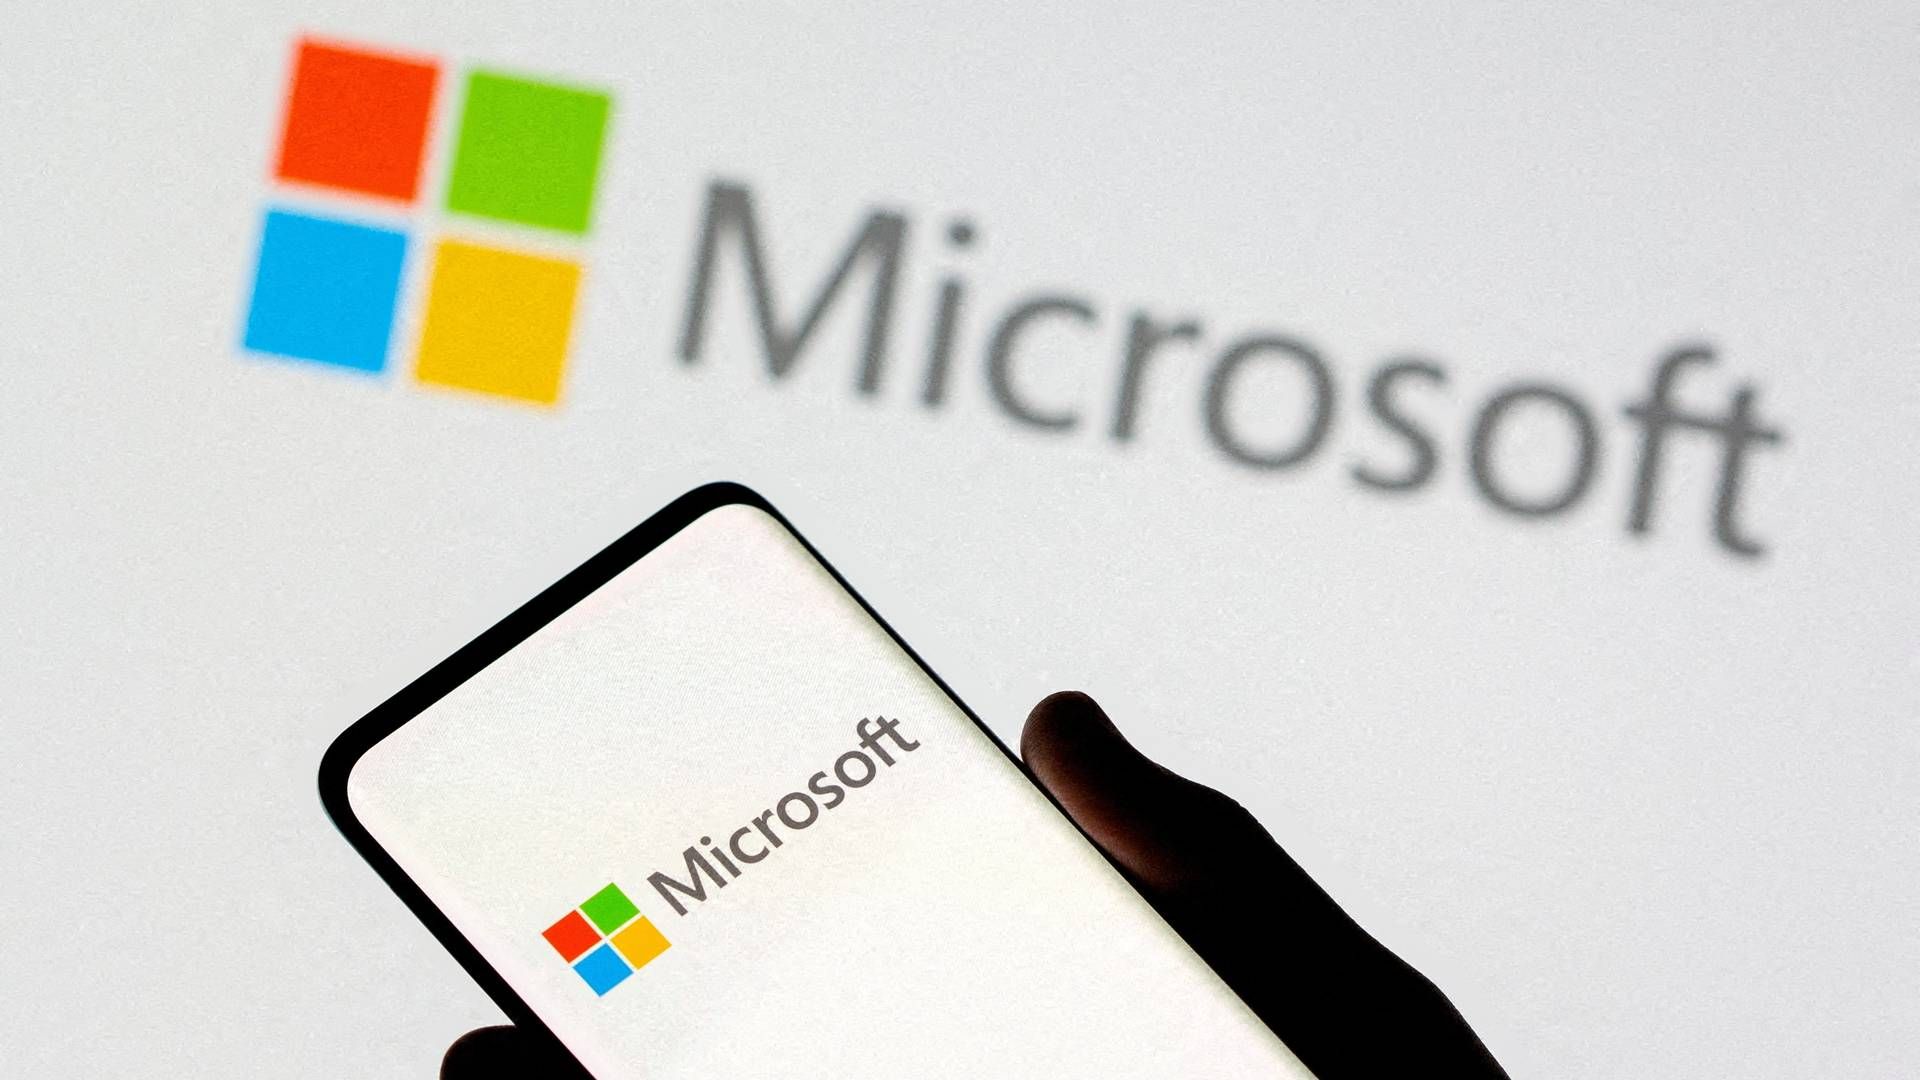 Microsoft håber at kunne give fintech-sektoren i Danmark et skub fremad med det nye partnerskab. | Foto: Dado Ruvic/Reuters/Ritzau Scanpix